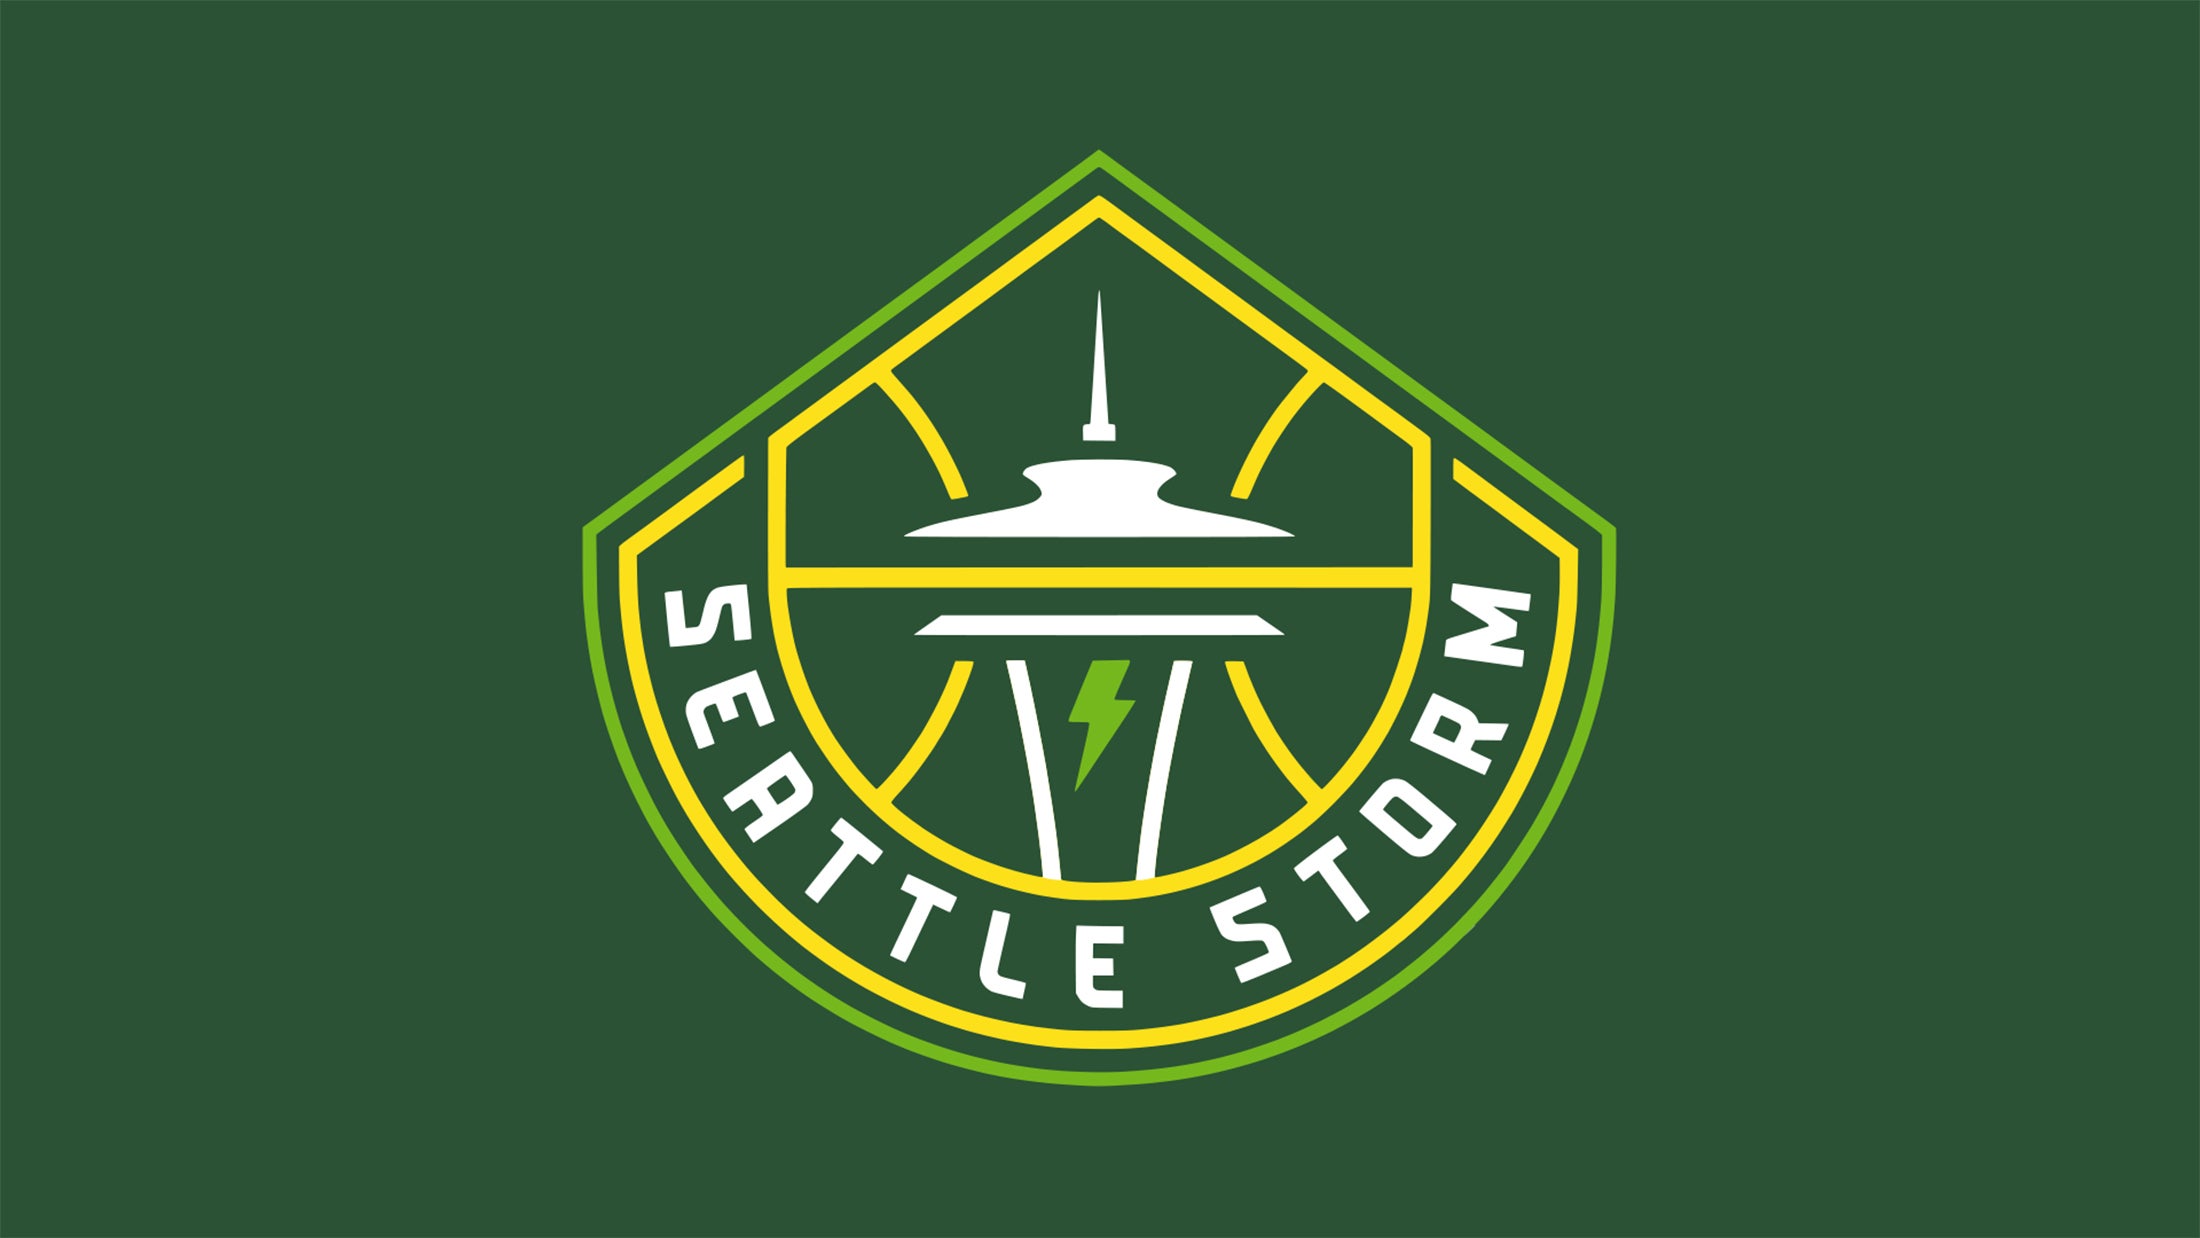 Seattle Storm vs. Las Vegas Aces in Seattle promo photo for Climate Pledge Arena presale offer code